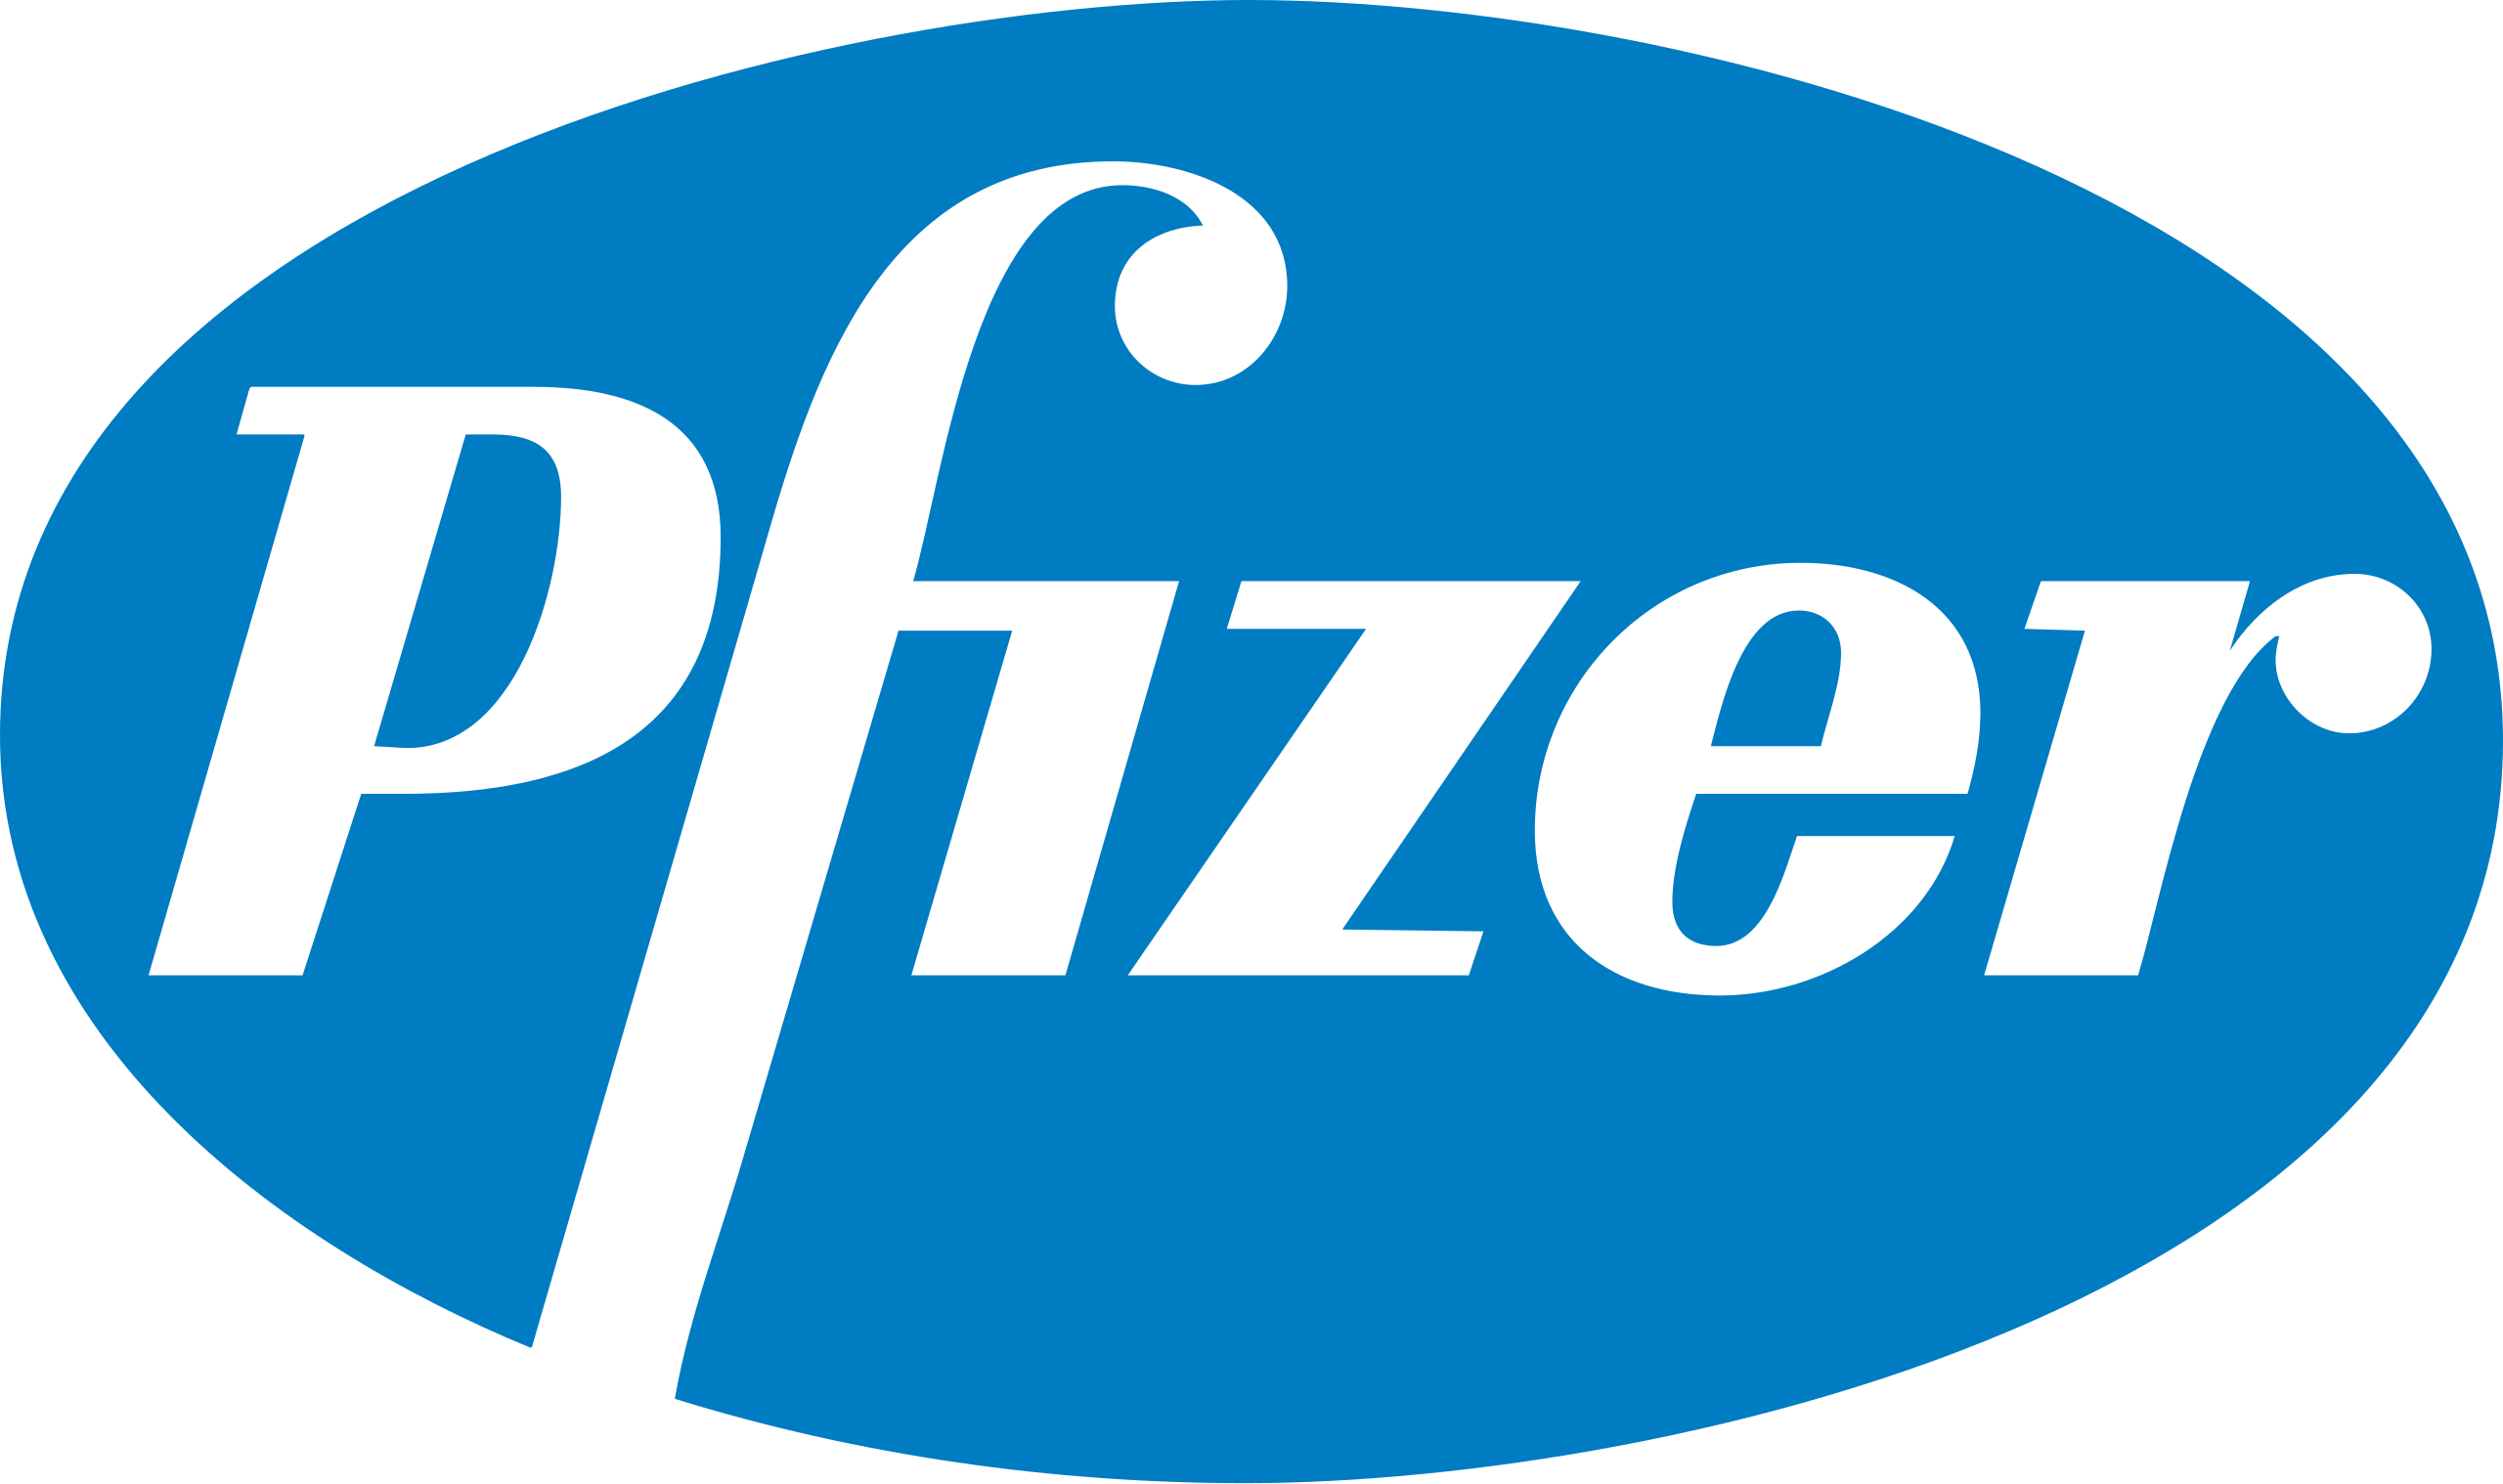 Georgia, Pfizer Inc.